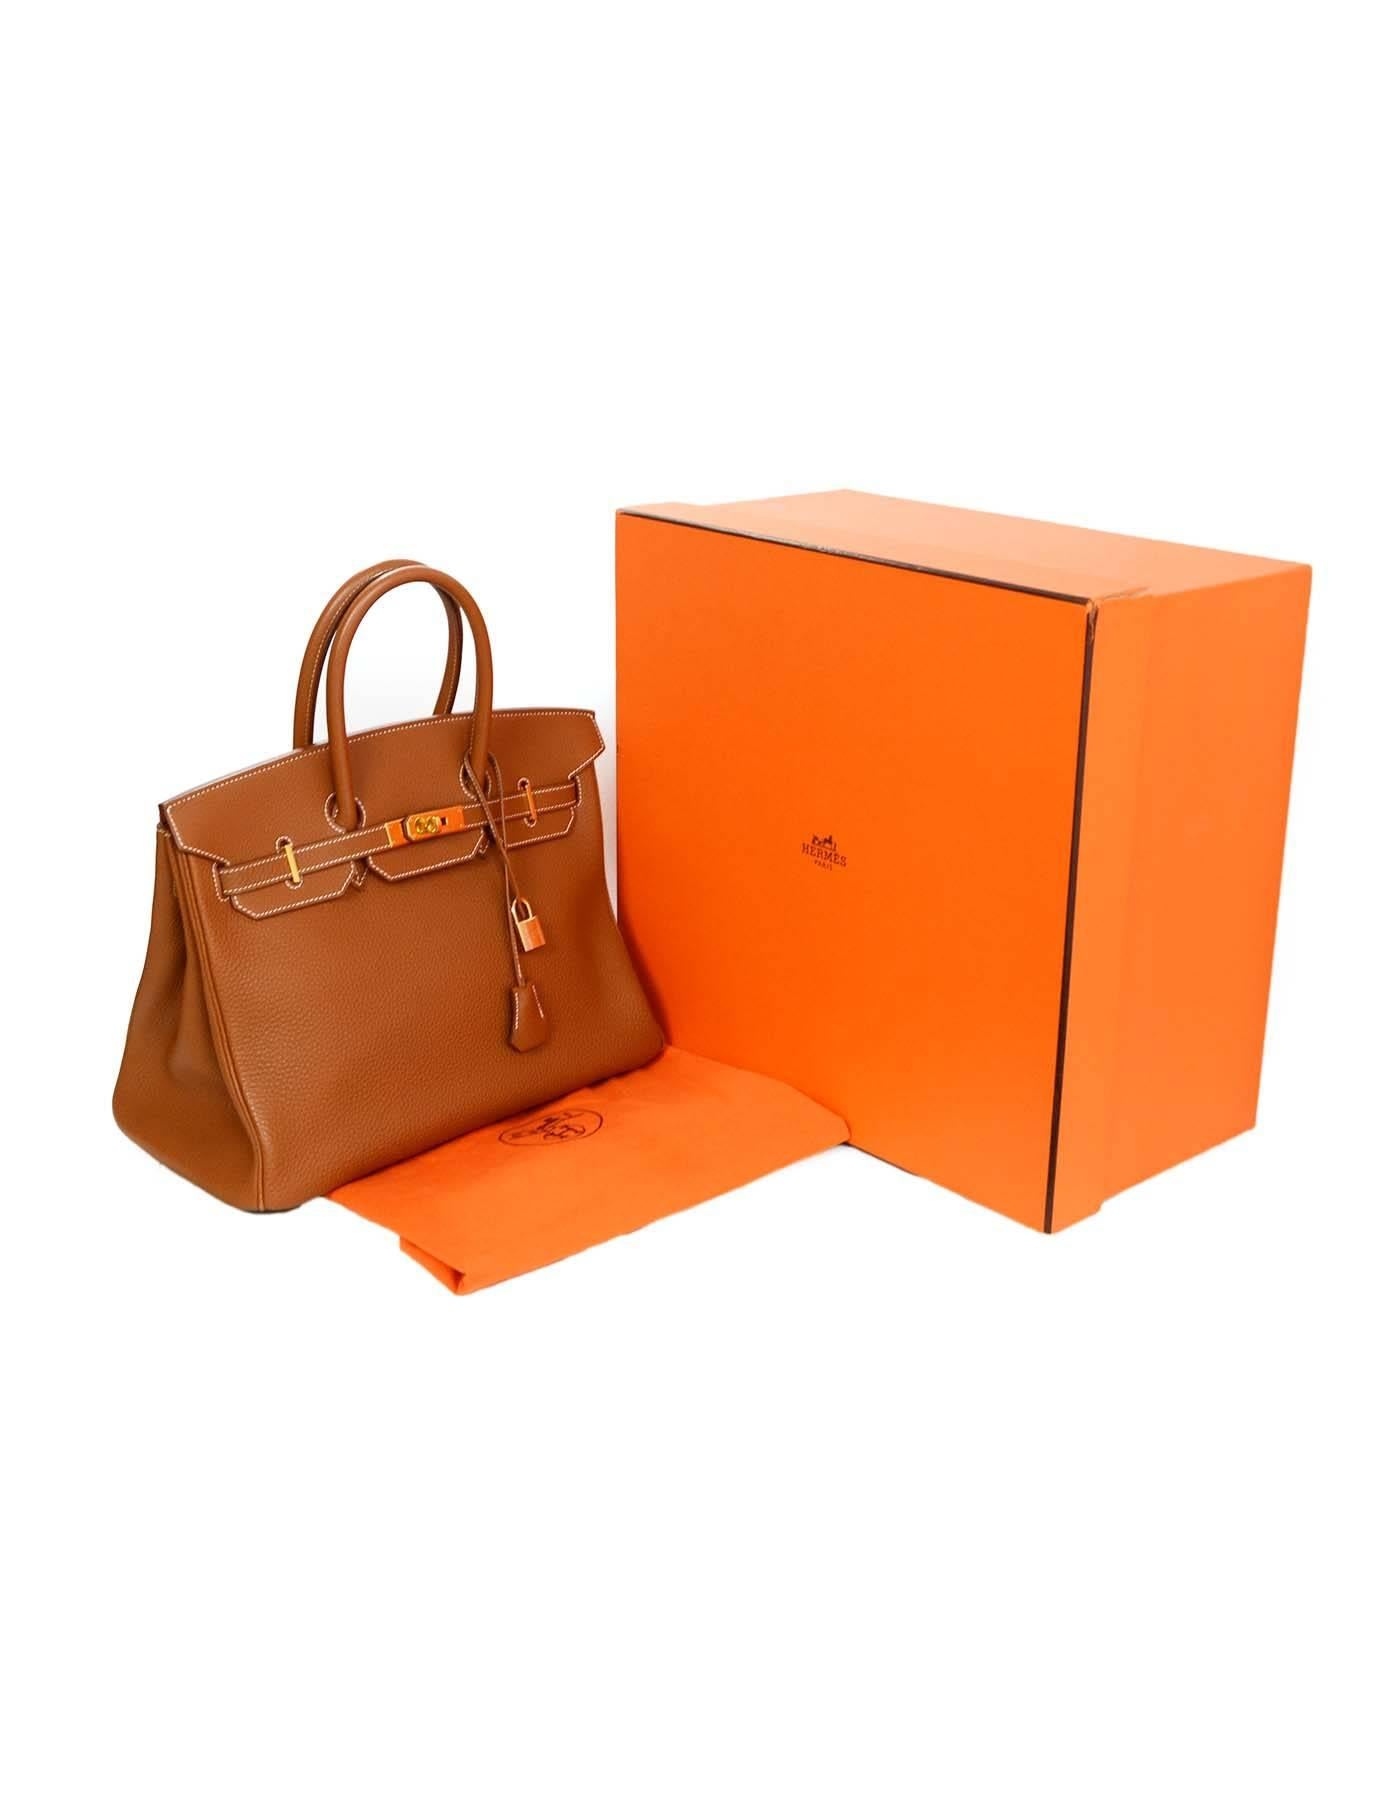 Hermes Gold/Tan Togo Leather 35cm Birkin Bag w/ Box & Dust Bag 1